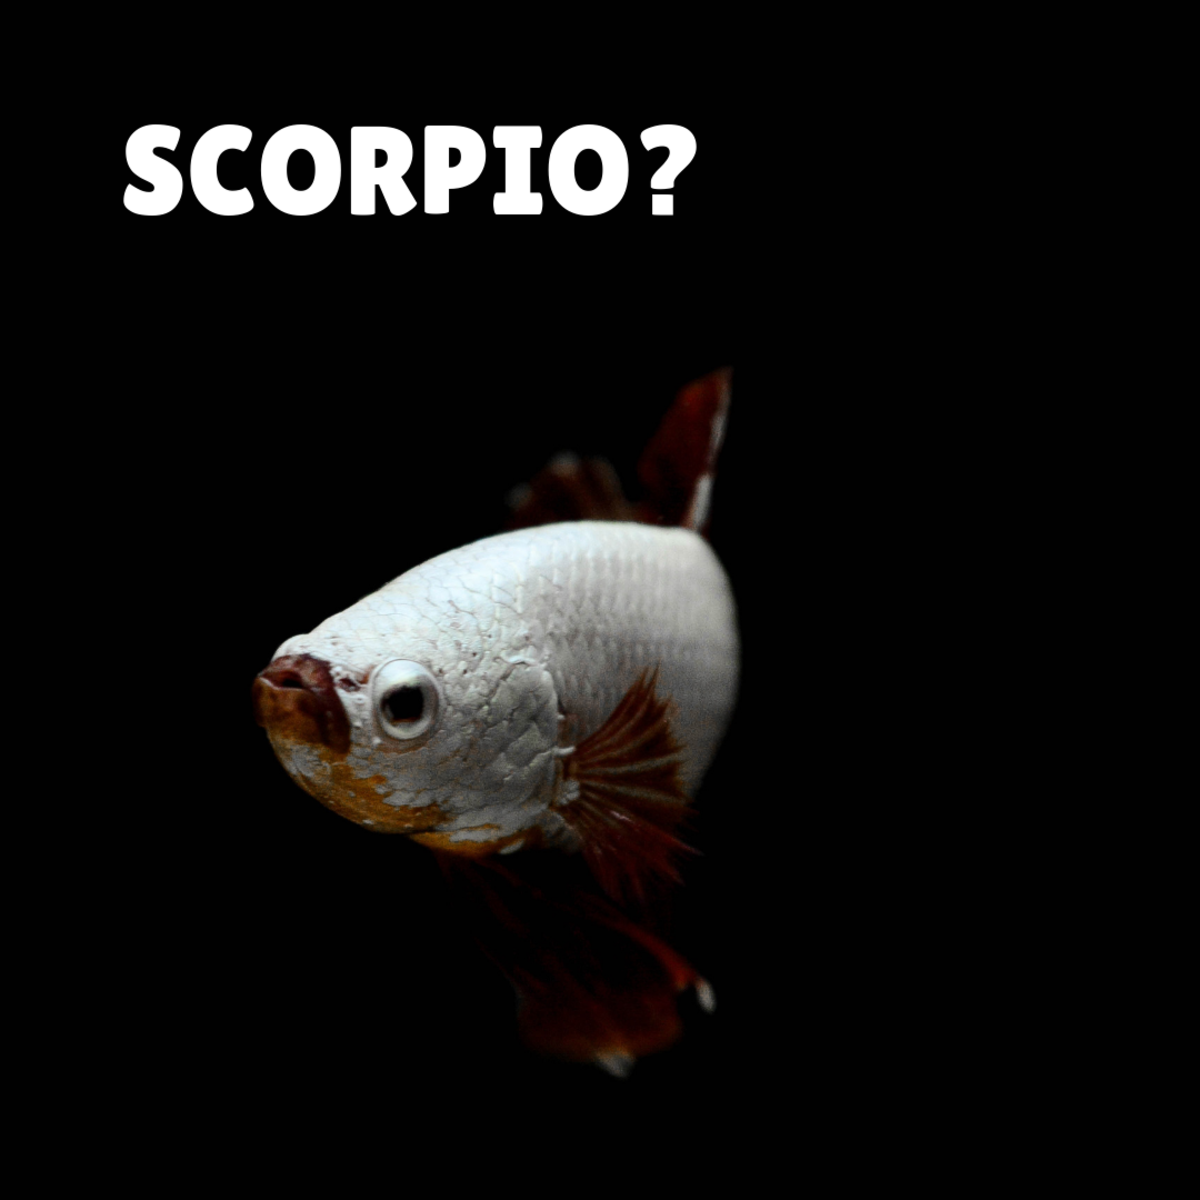 Is your betta fish a Scorpio?